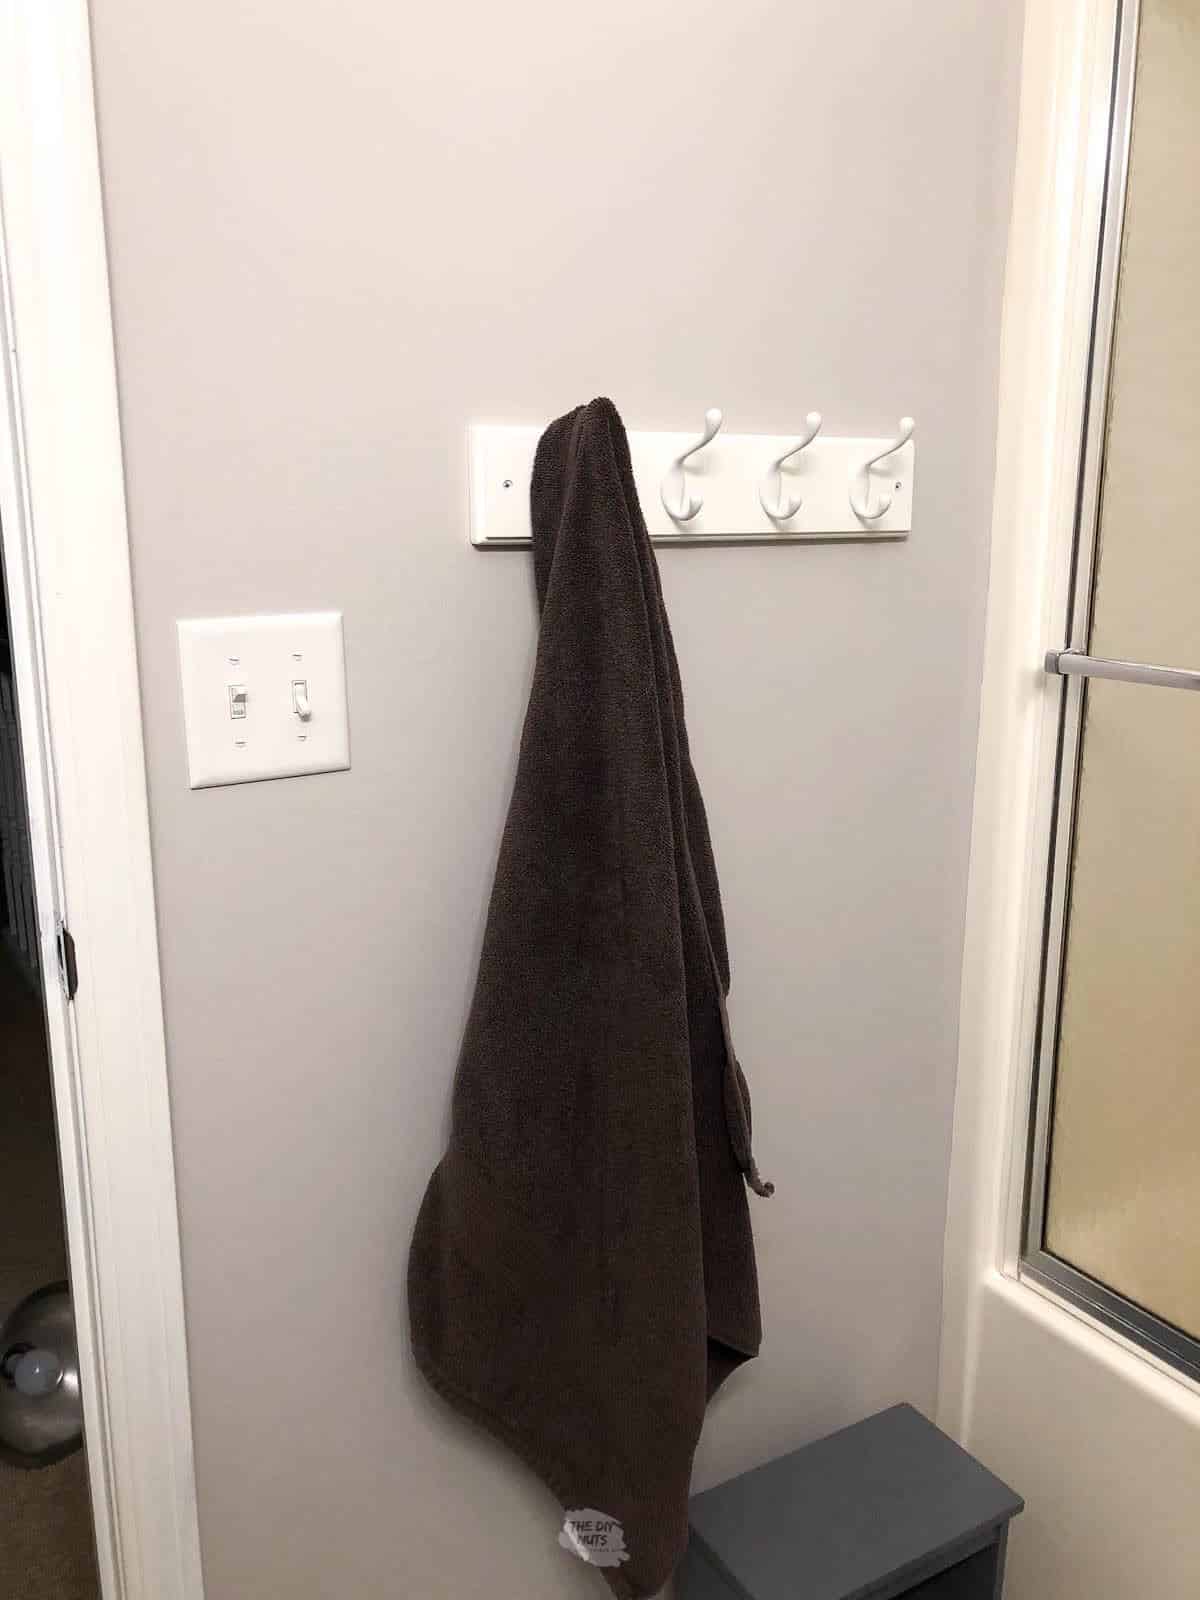 brown towel hanging on bathroom hook half way up the wall.